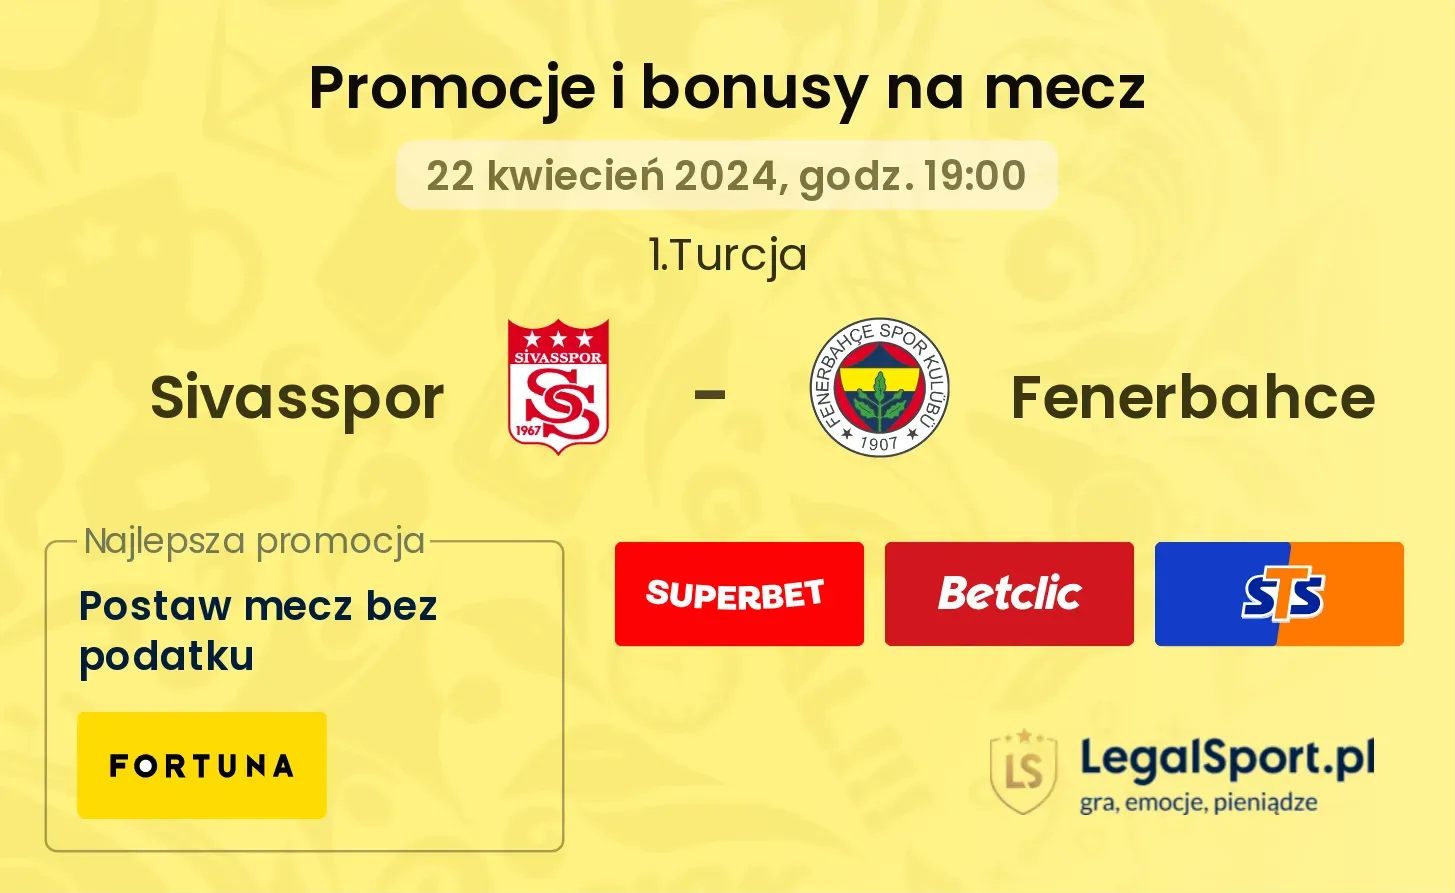 Sivasspor - Fenerbahce promocje bonusy na mecz